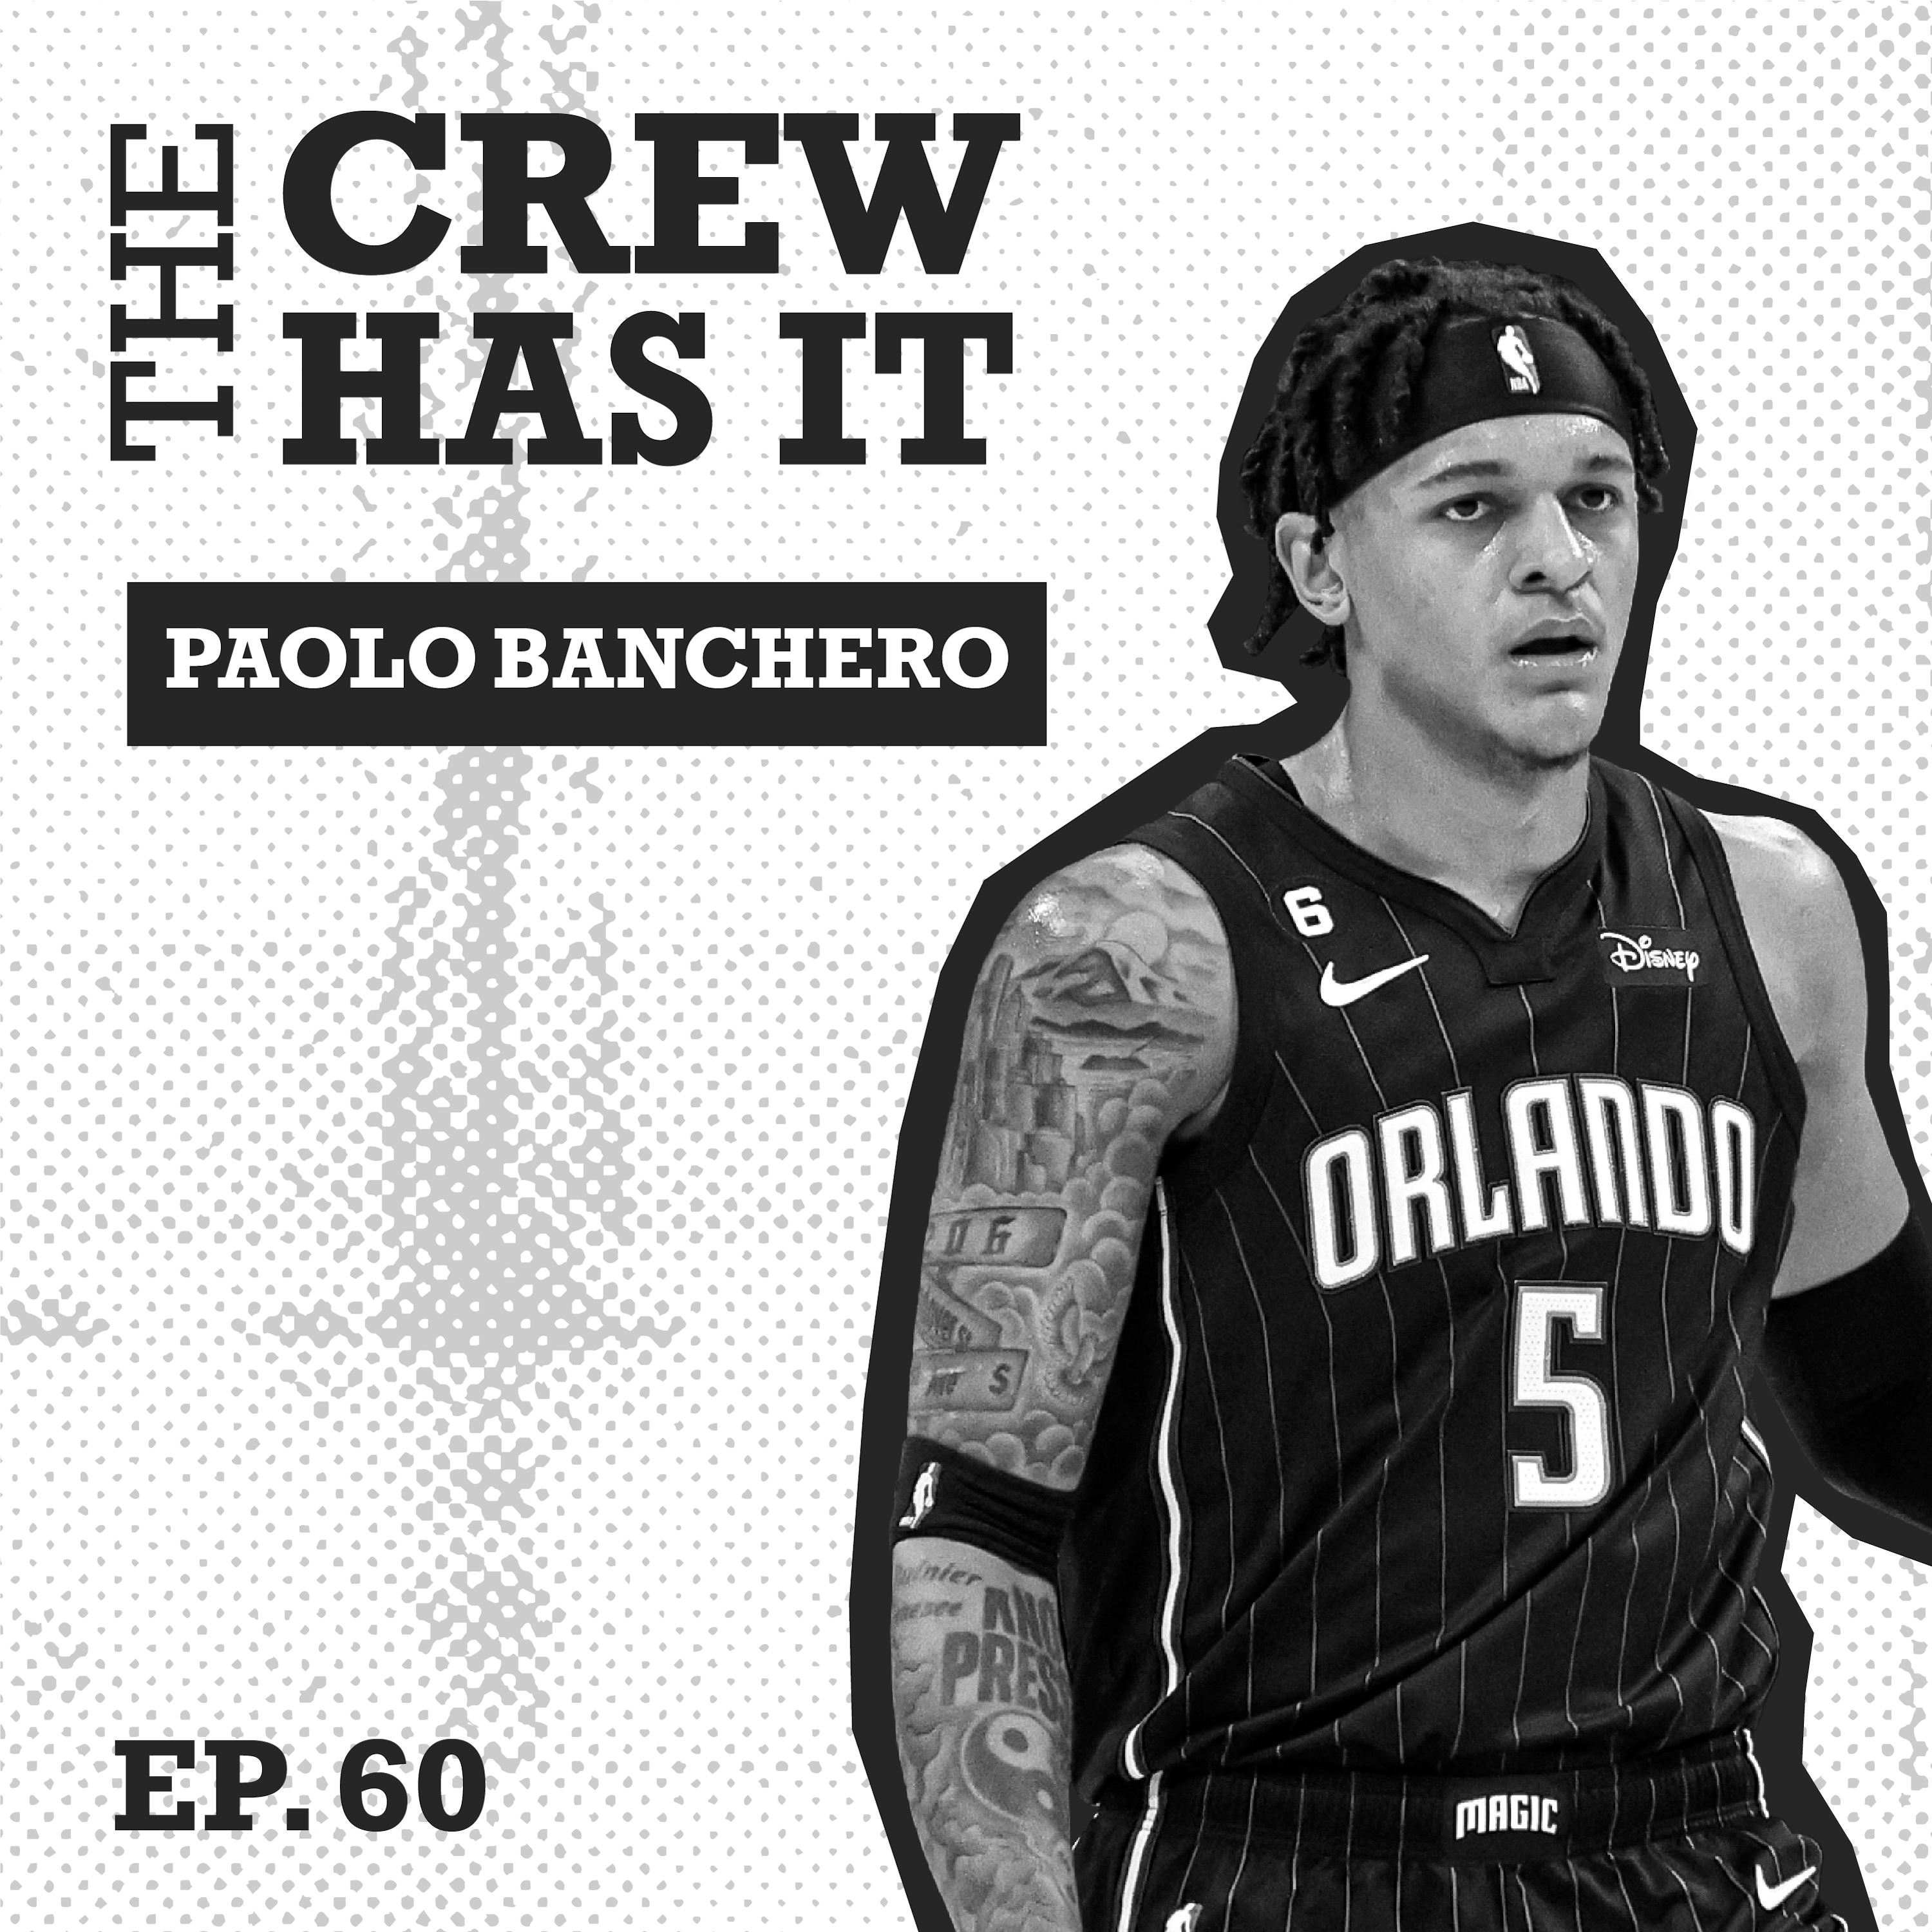 NBA Star , Paolo Banchero talks NBA Career & his love for Power | Ep 60 | The Crew Has It